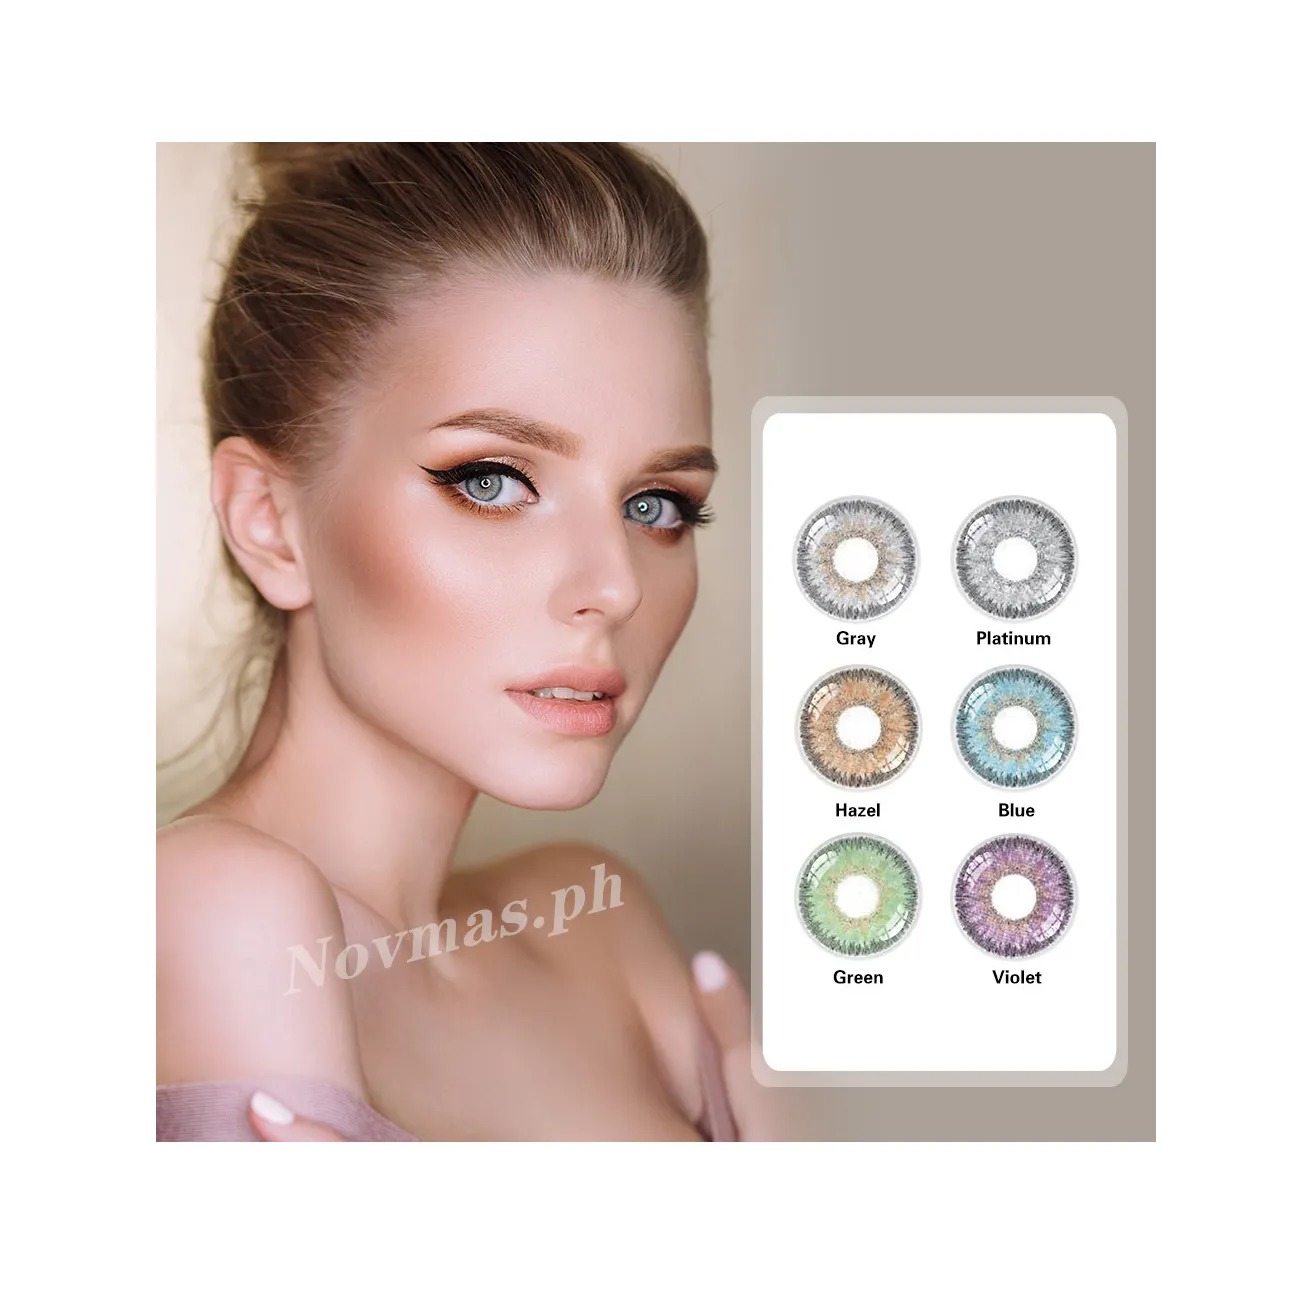 Novmas Free Shipping American Popular Girl Beauty Eye Lenses Romance Colored Contact Lens For Dark Eyes